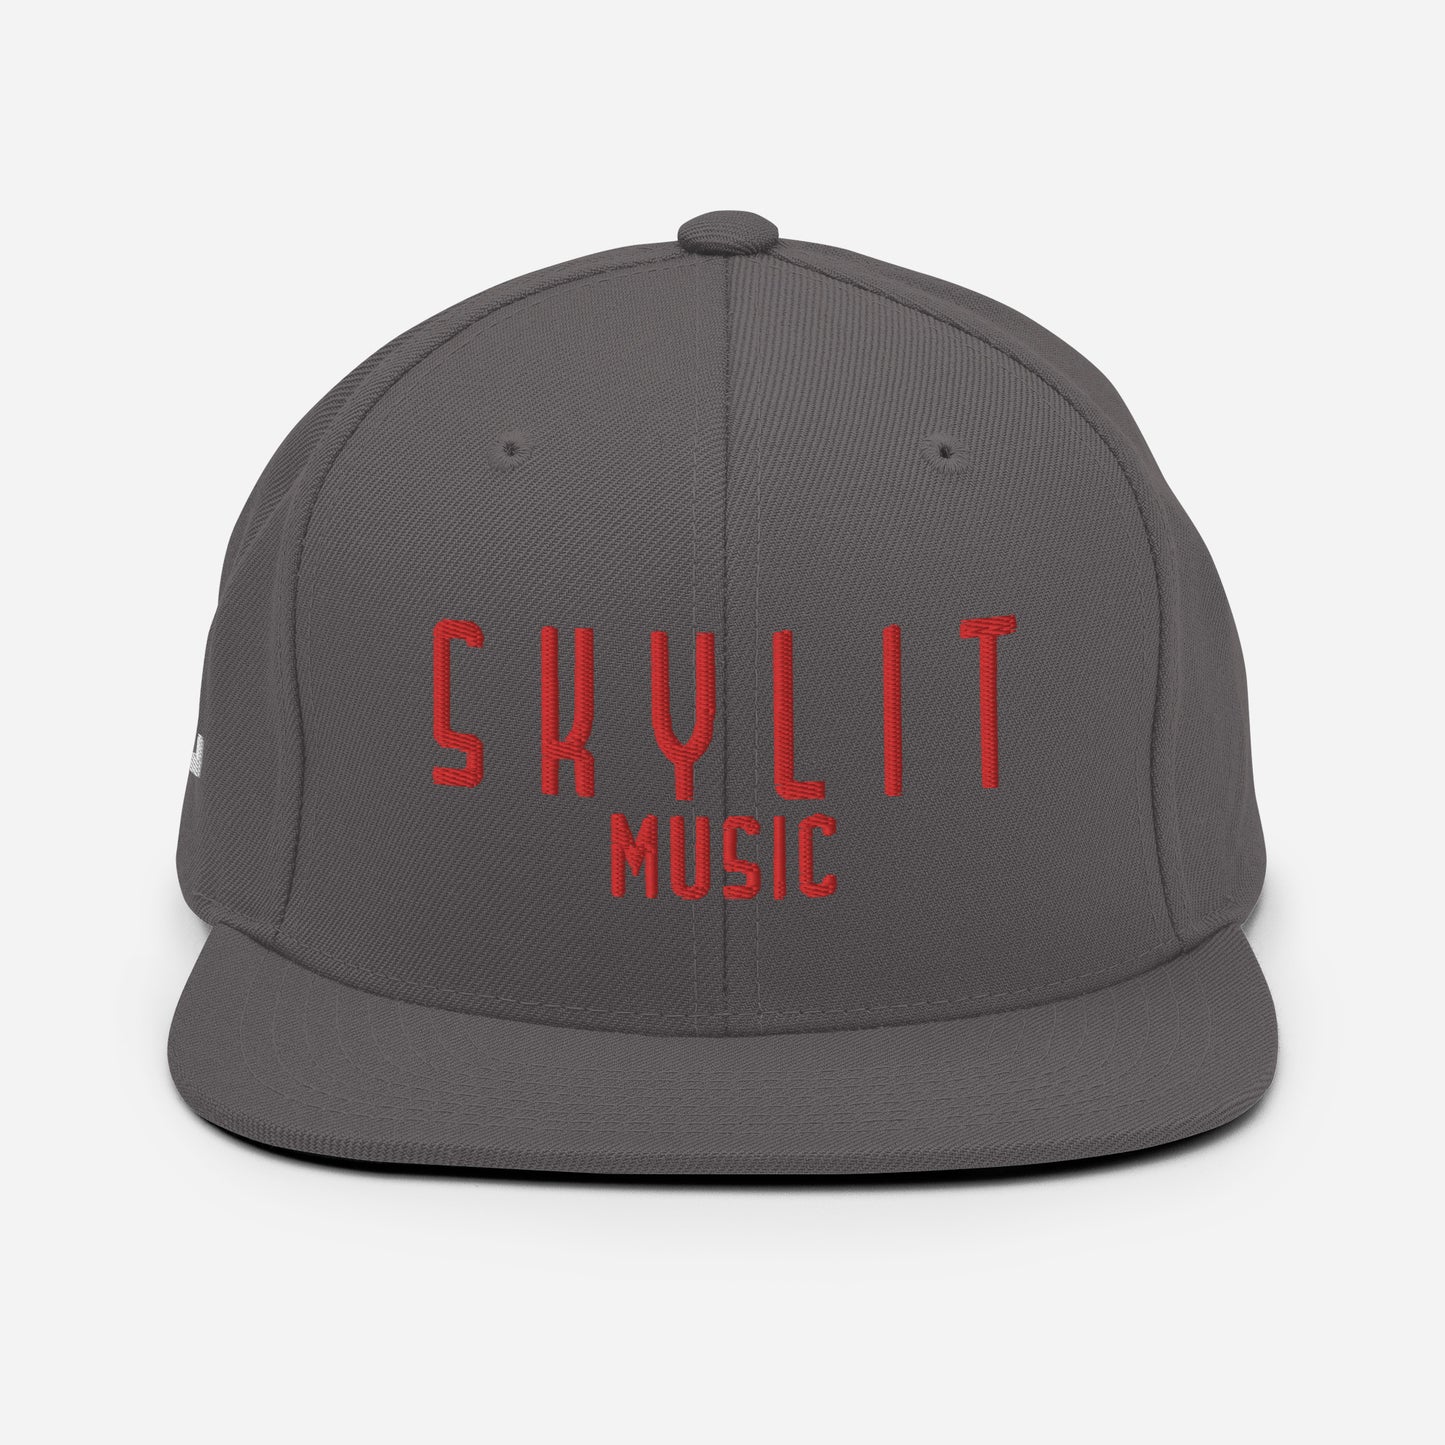 Skylit Music Snapback Hat